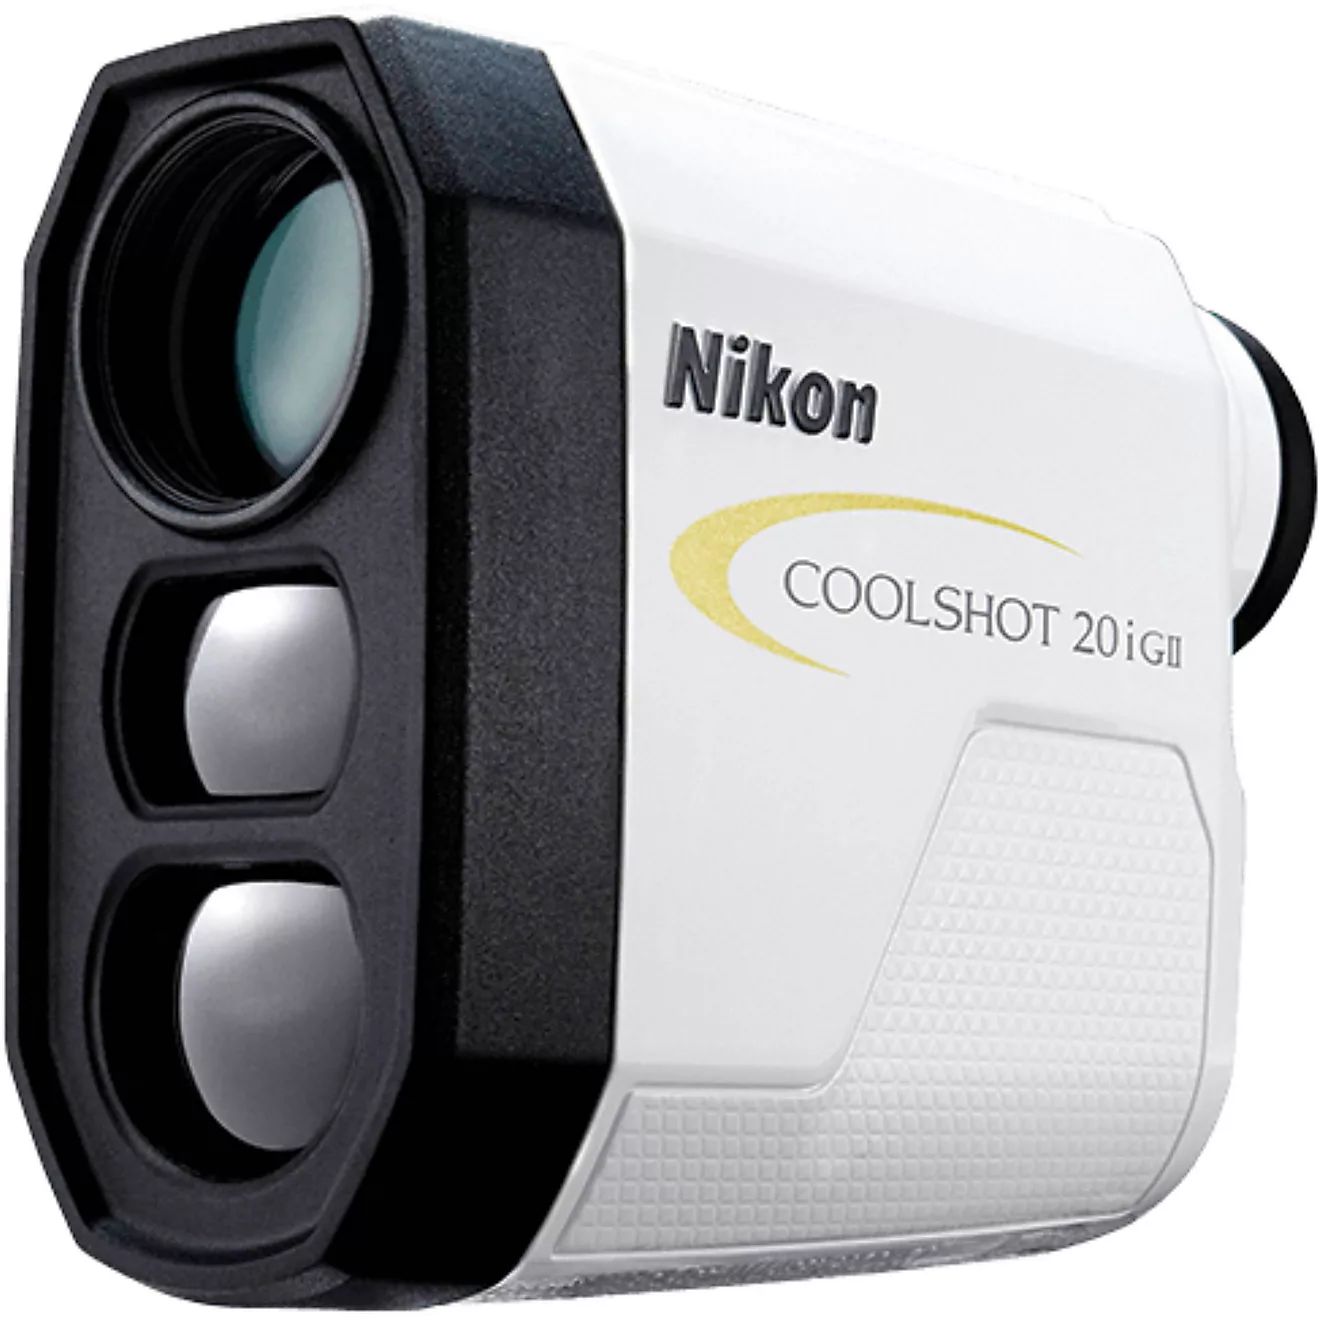 Nikon COOLSHOT 20i GII Golf Laser Rangefinder | Academy | Academy Sports + Outdoors